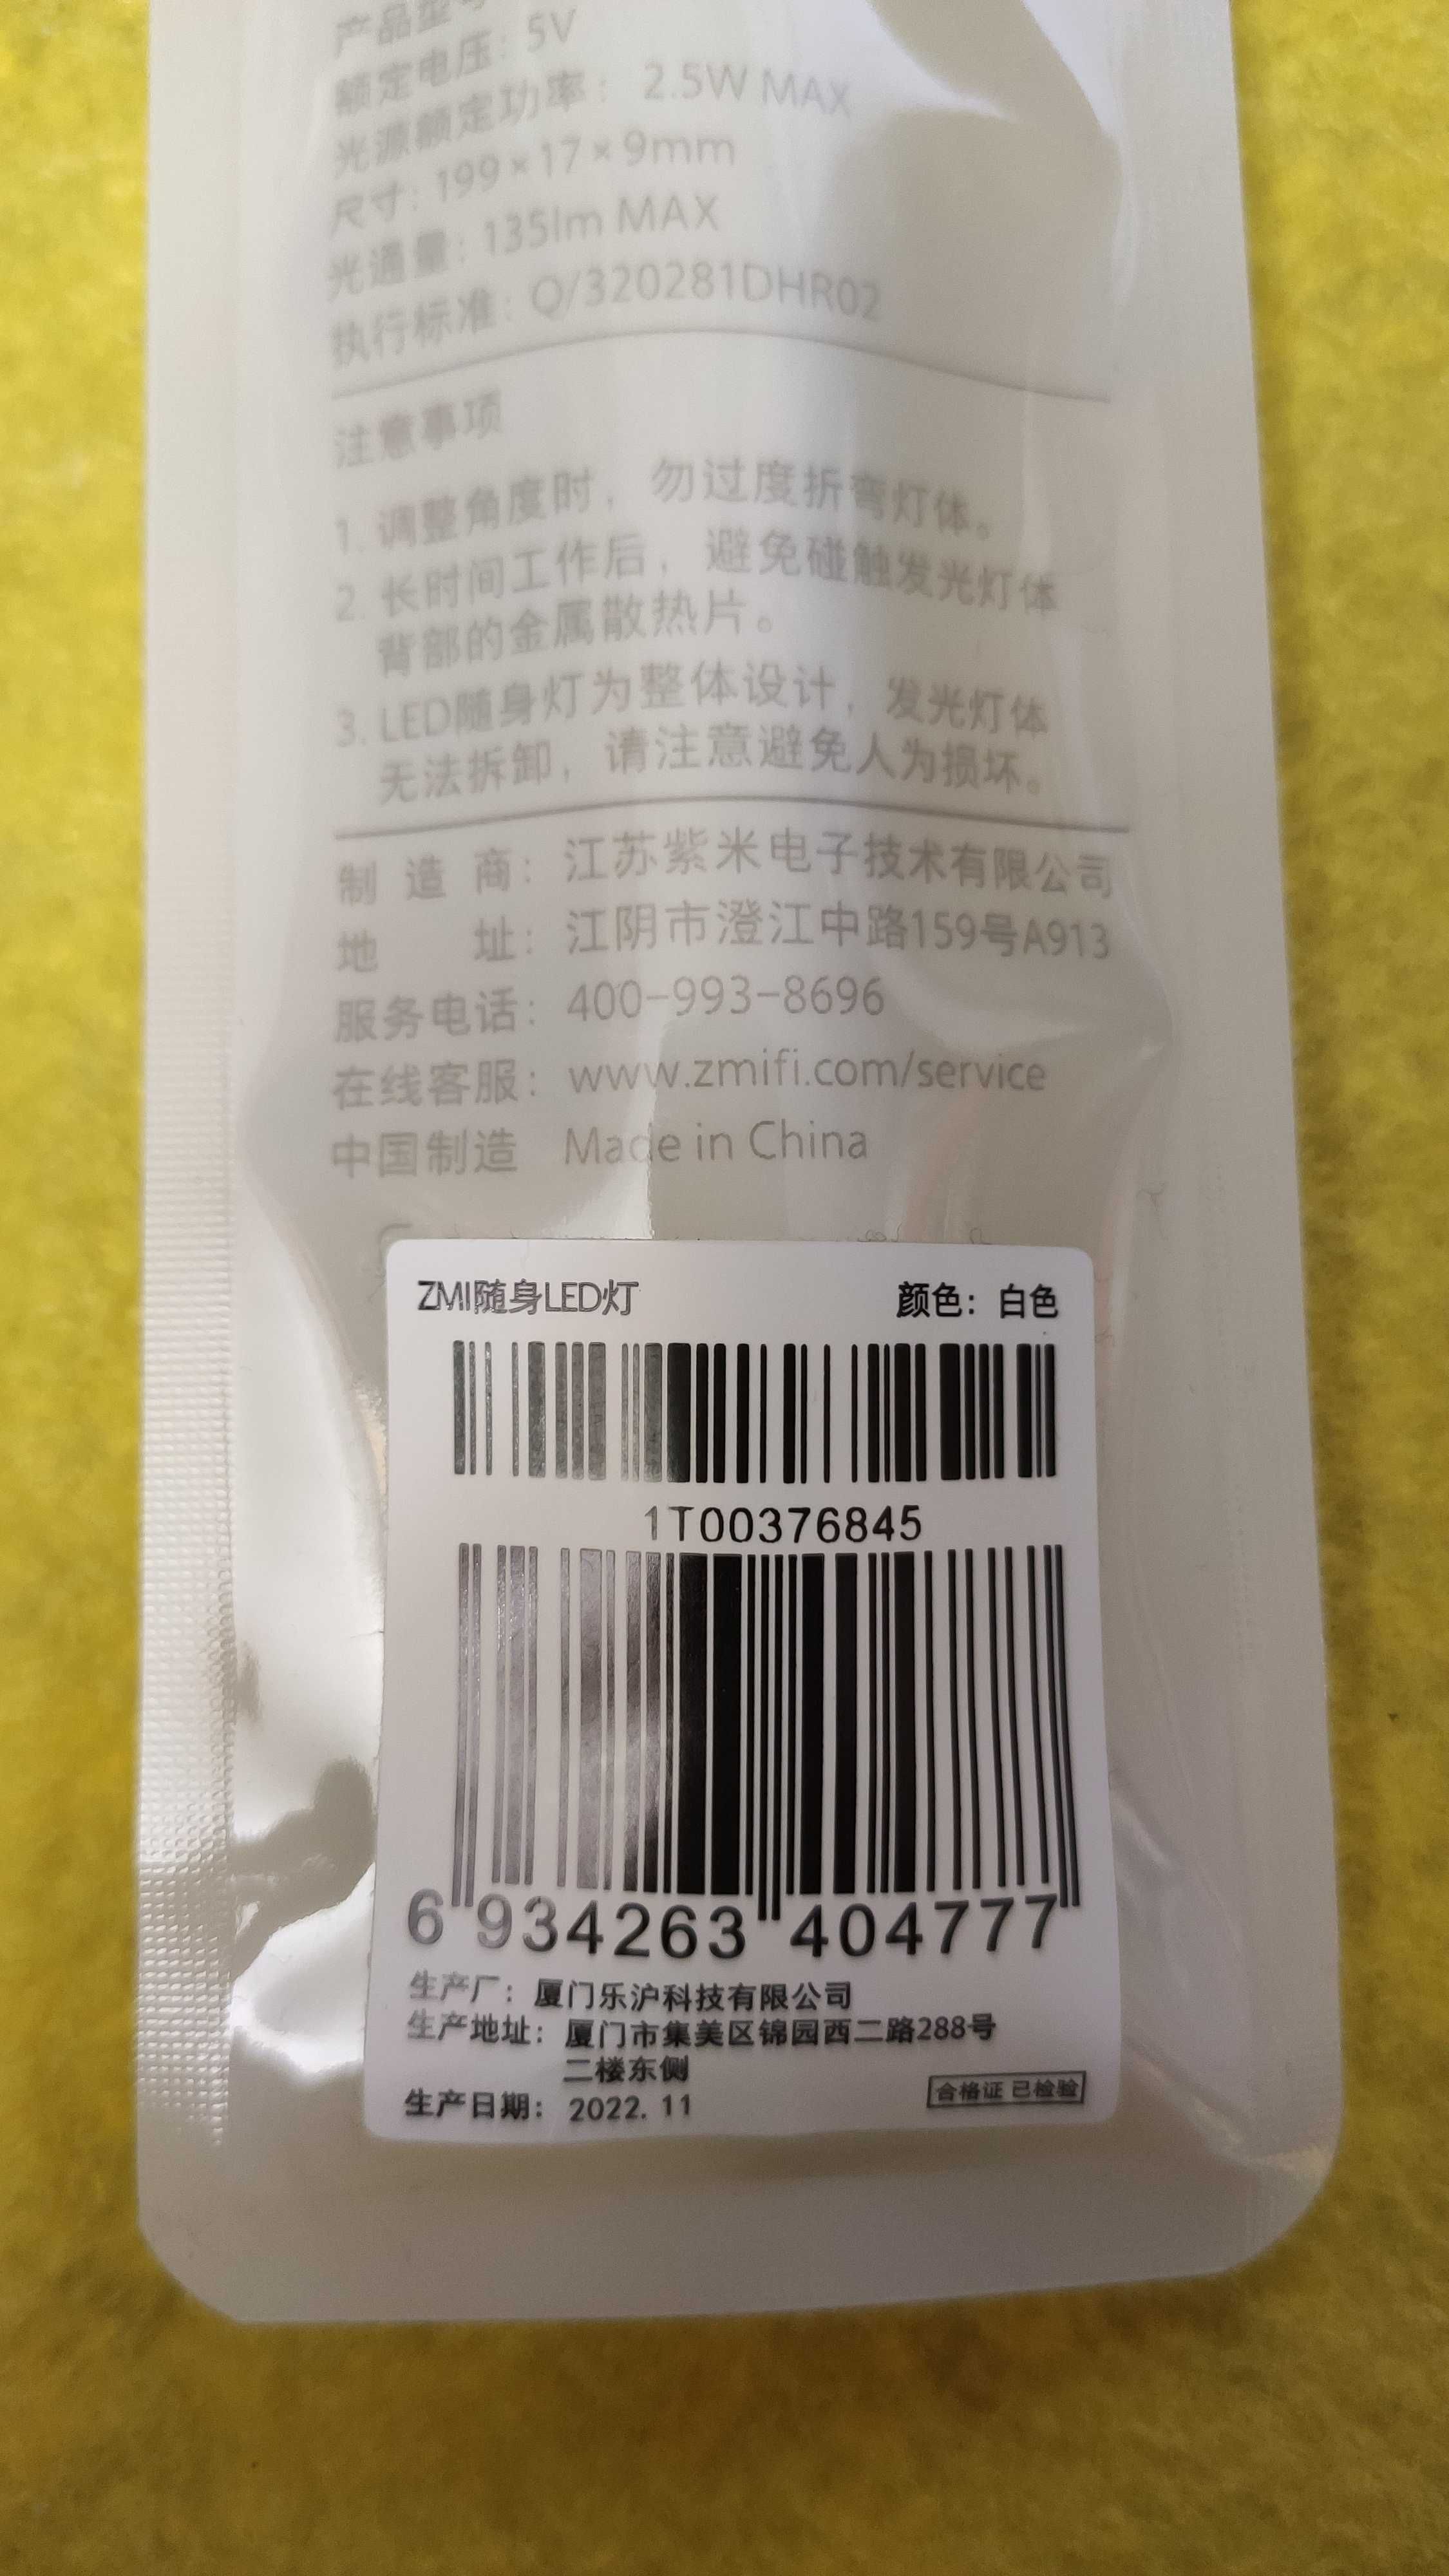 USB LED лампа Xiaomi ZMI Portable оригинал